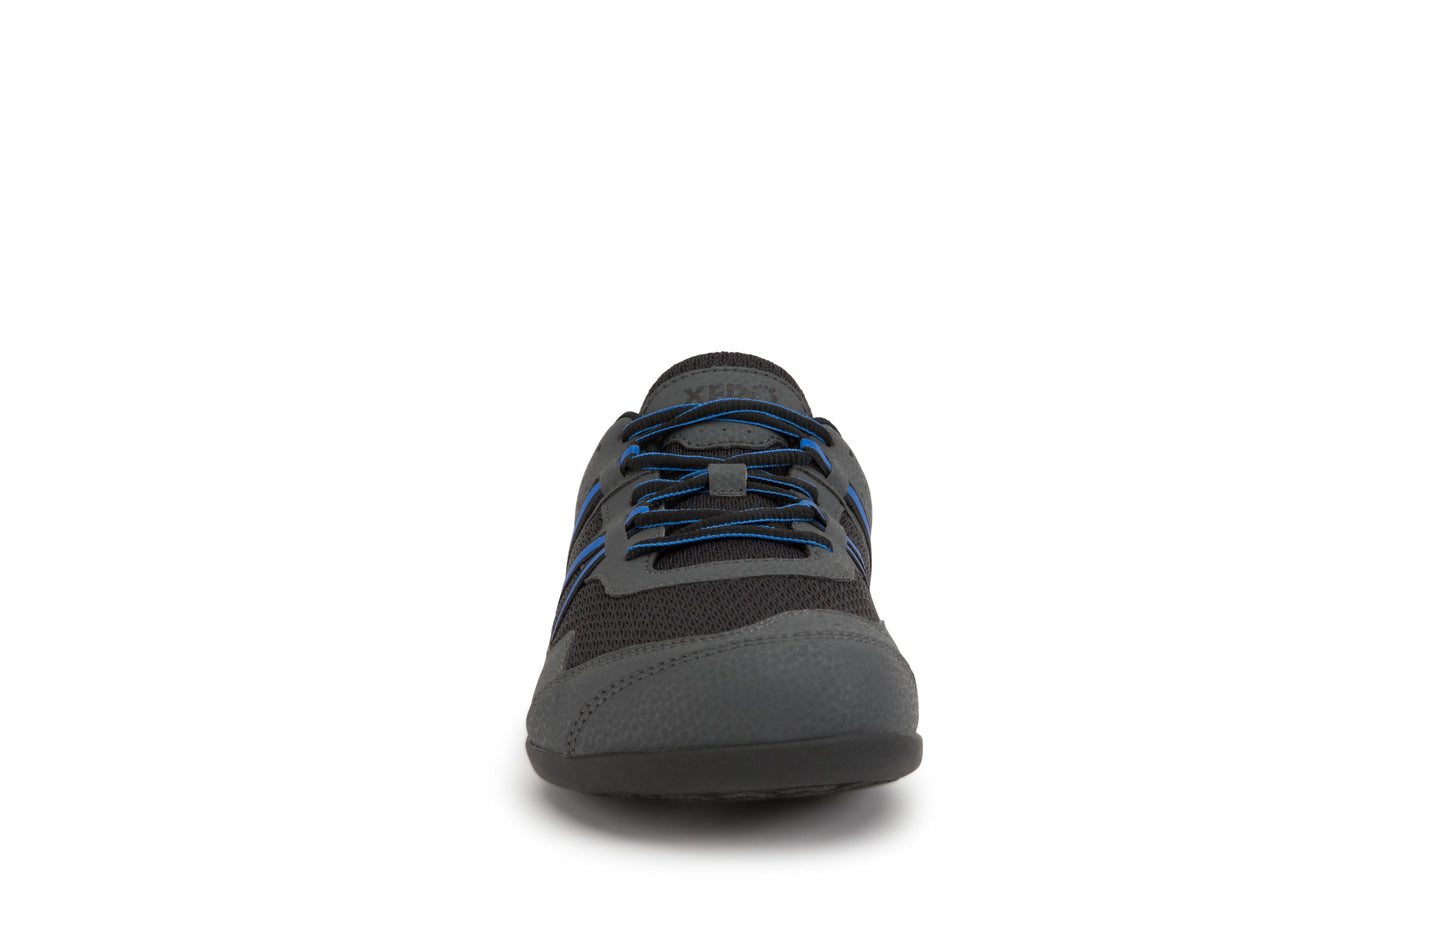 Xero Shoes Prio Womens barfods træningssko til kvinder i farven asphalt blue, forfra